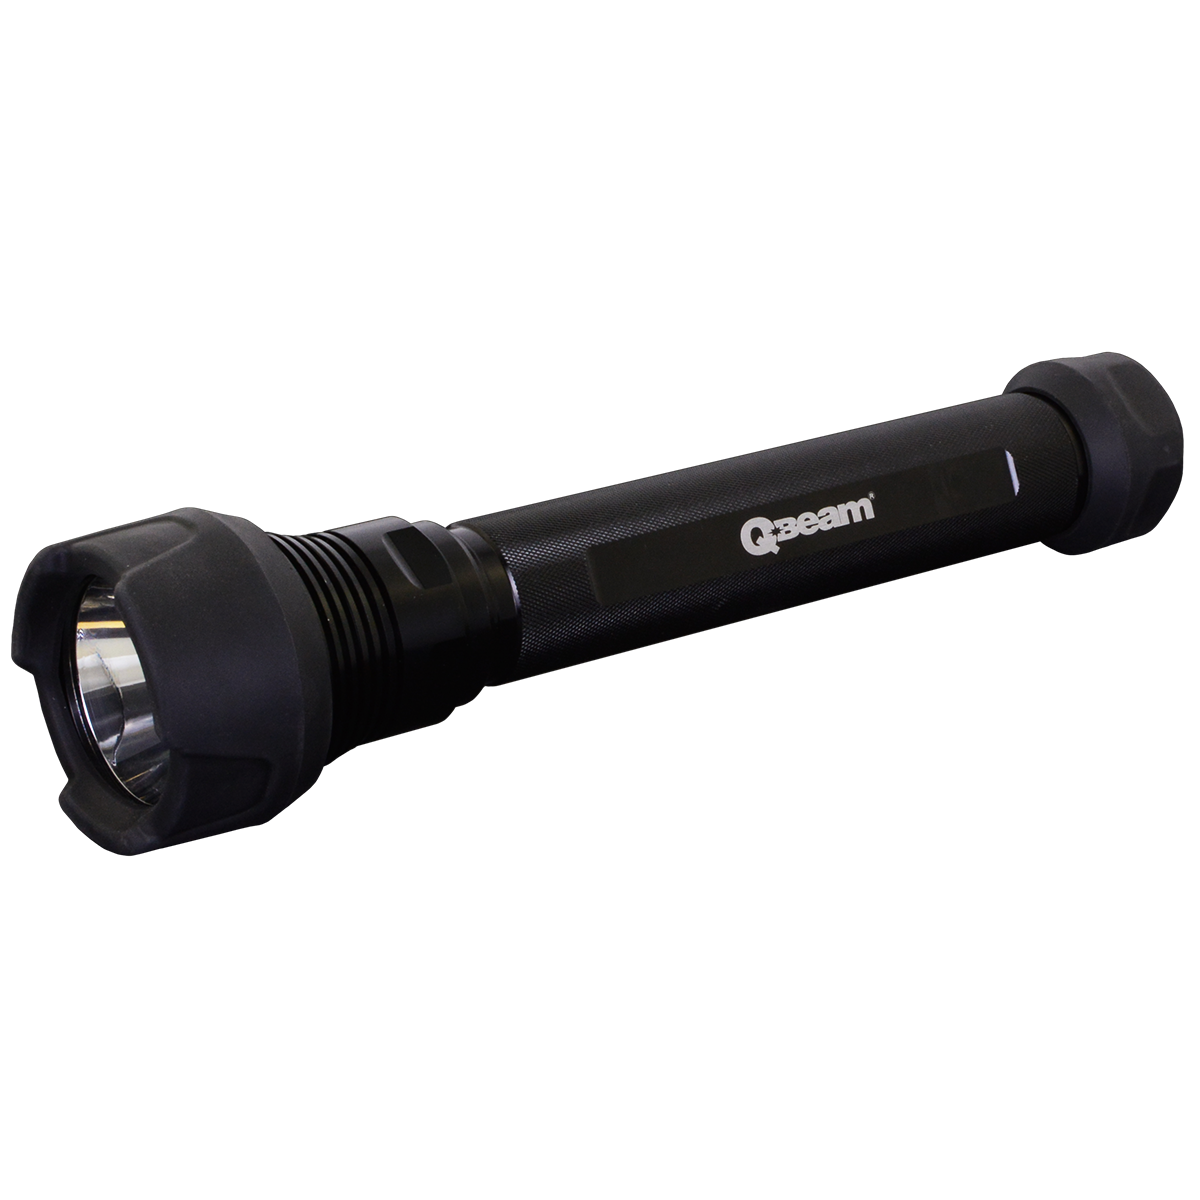 Q-Beam Stealth 70 1W Aluminum Waterproof LED Flashlight